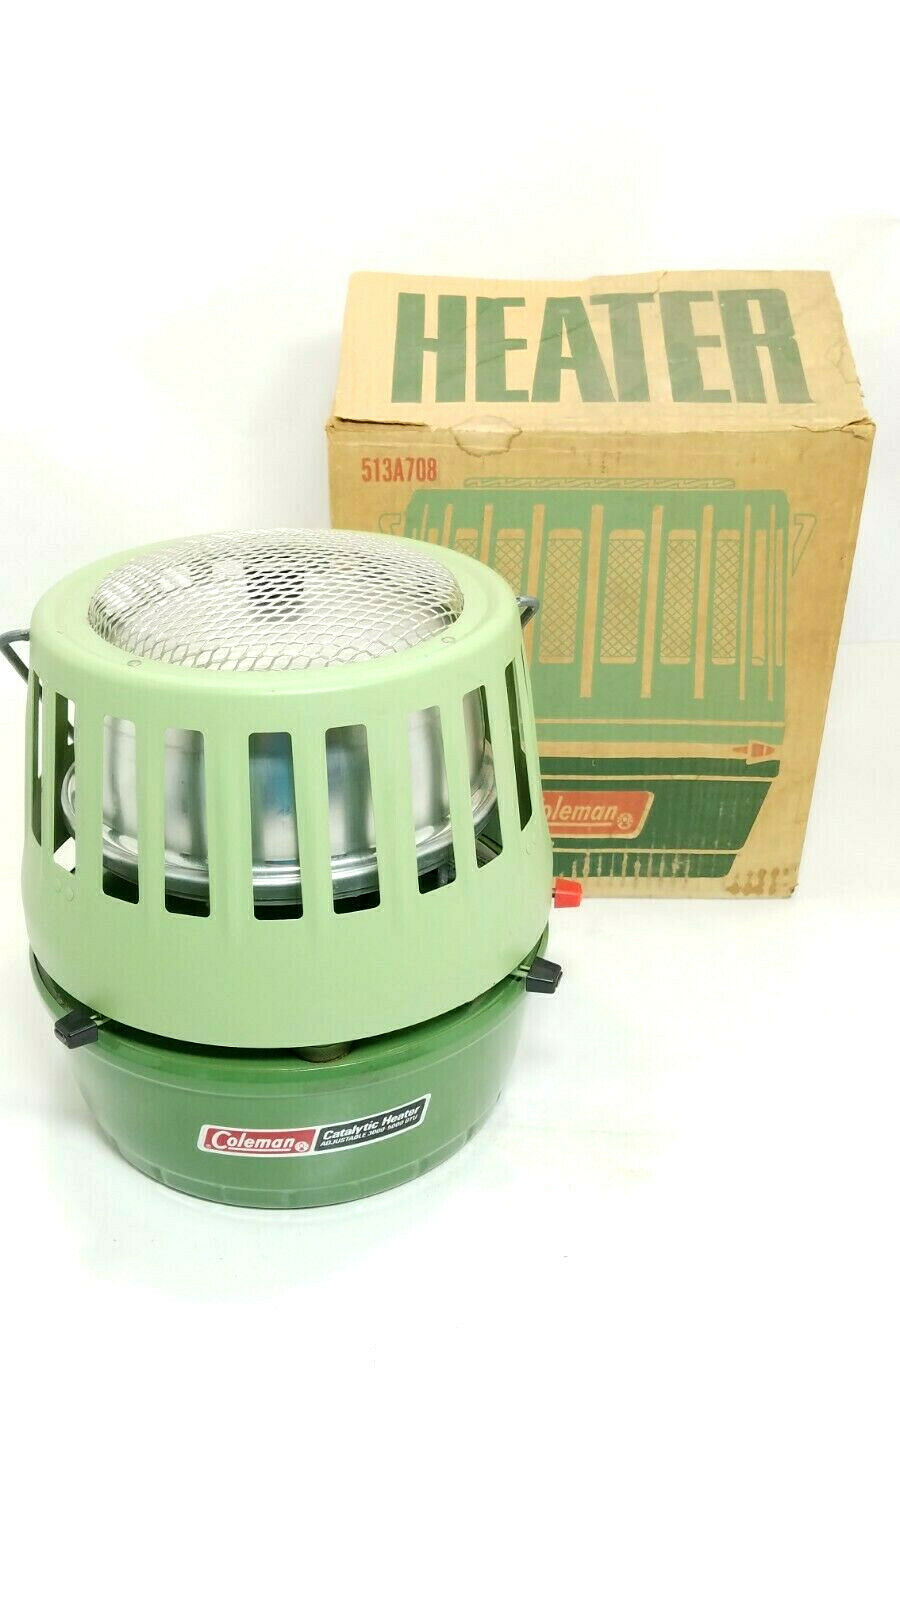 Vintage Coleman Lantern Catalytic Heater 513a708 Dial-temp 3000-5000 Btu 1974